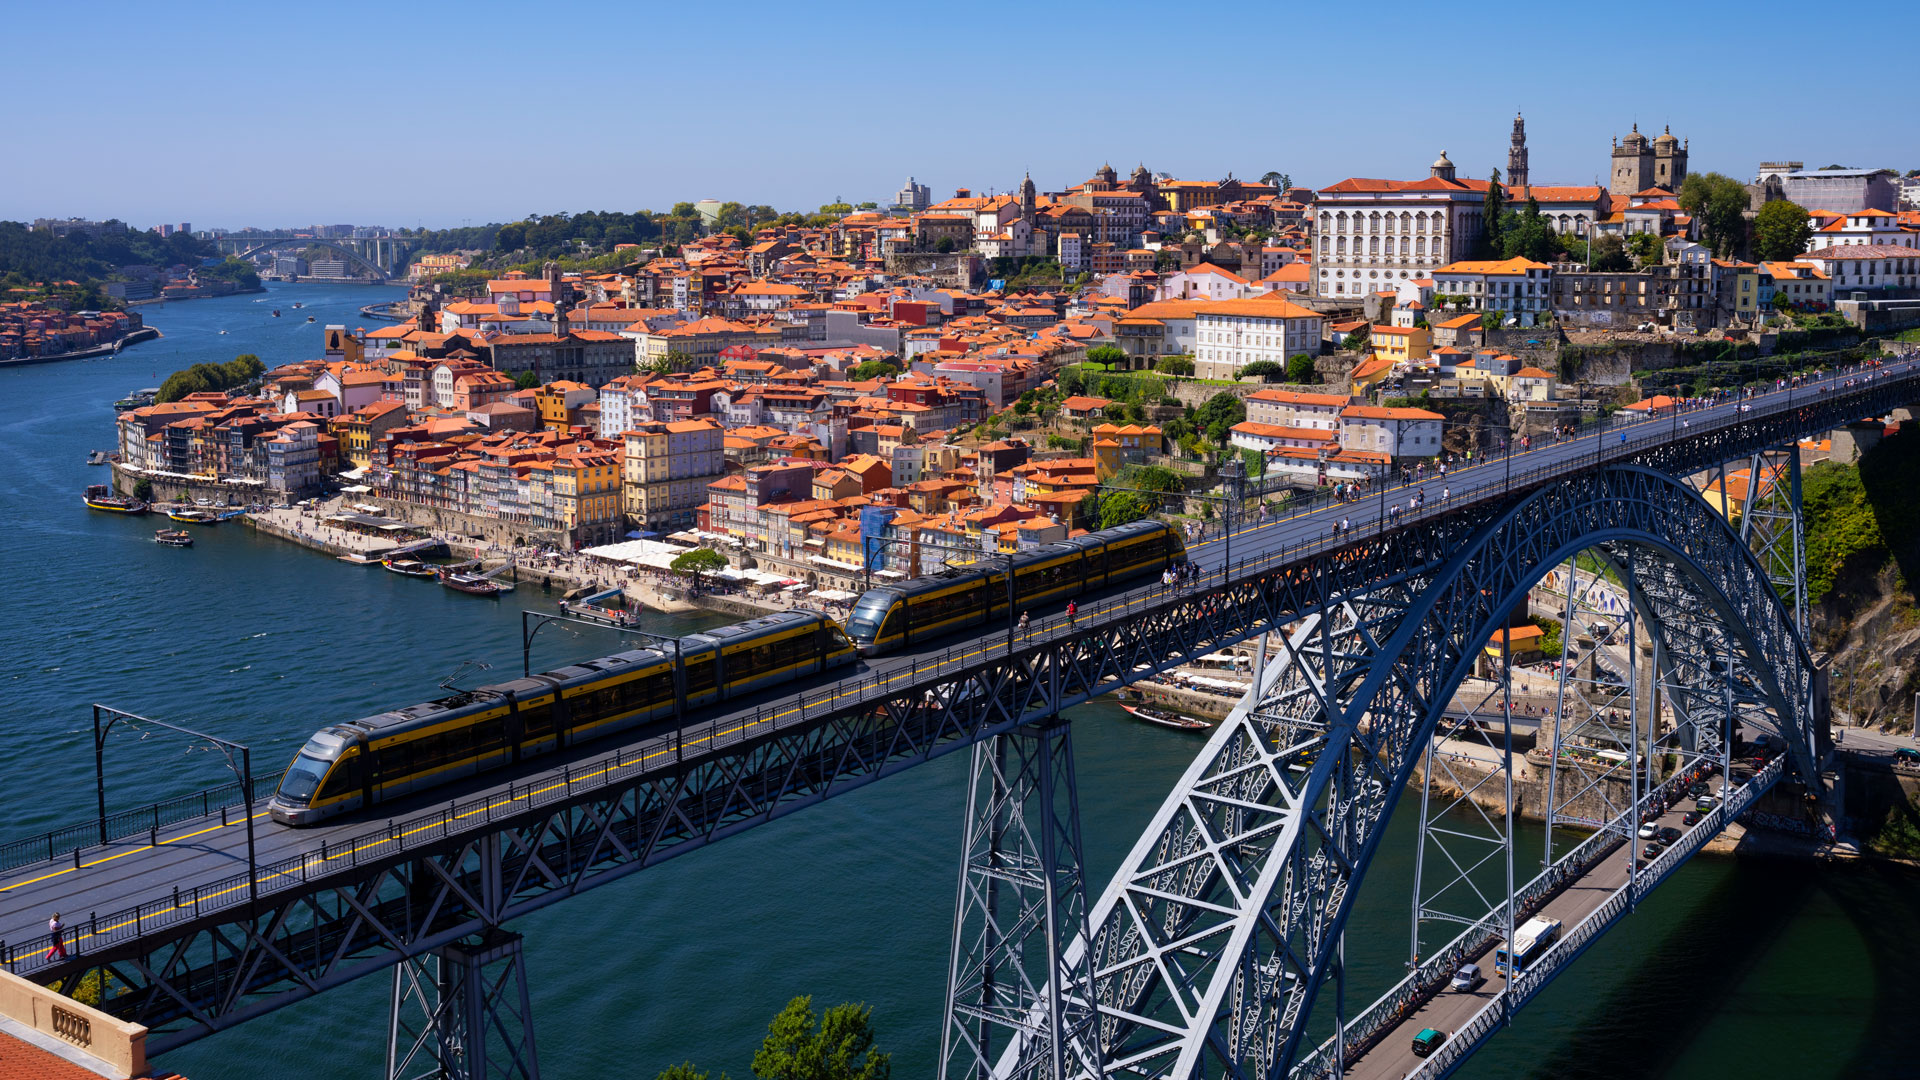 Discover Porto and the hotel location